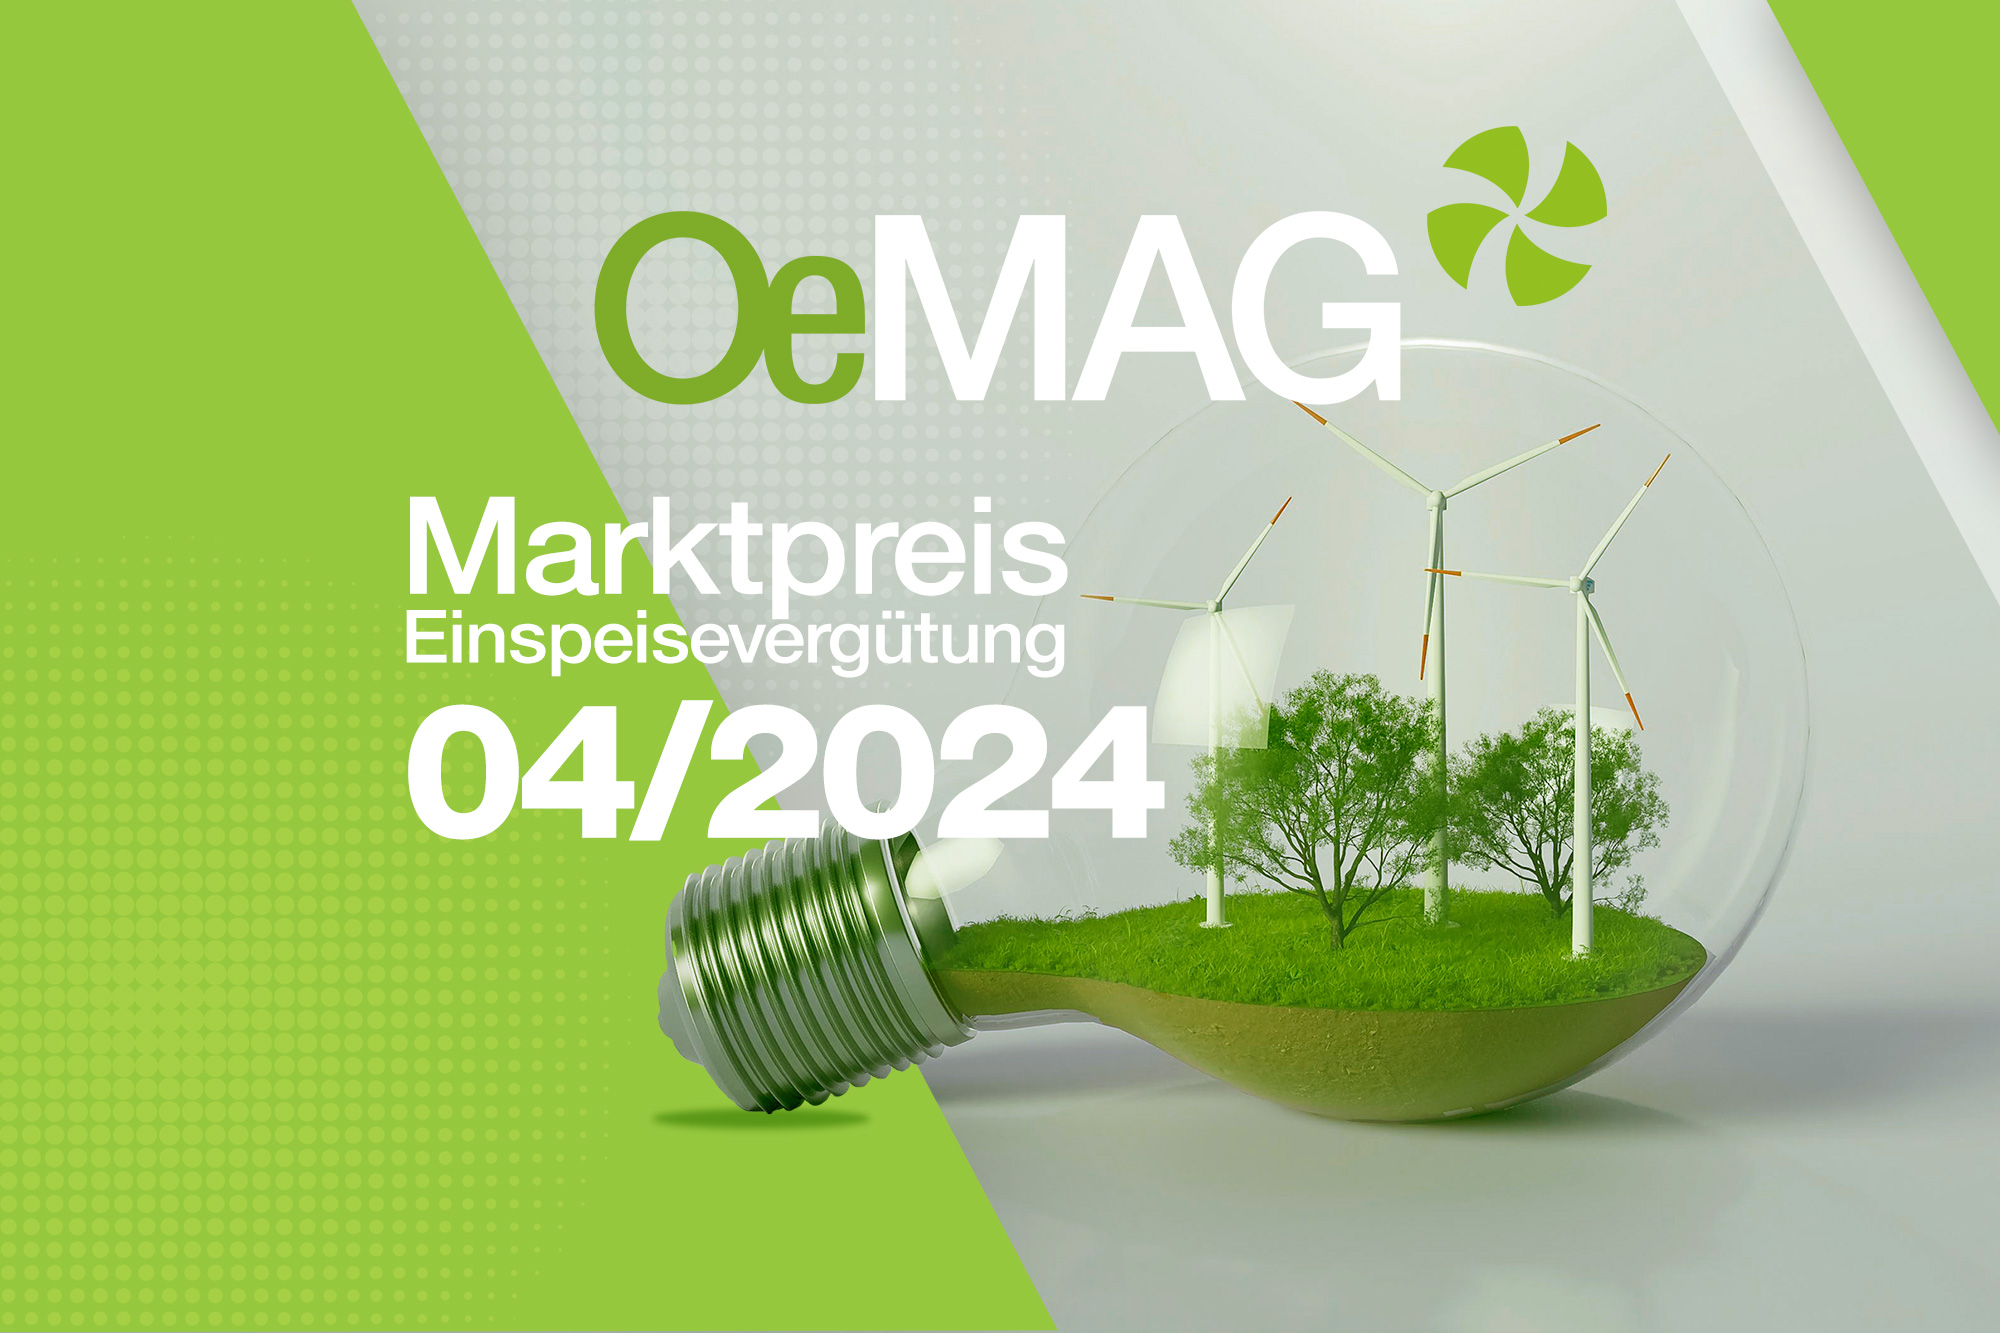 OeMAG Marktpreis 04/2024 Einspeisevergütung 4,655 ct/kWh